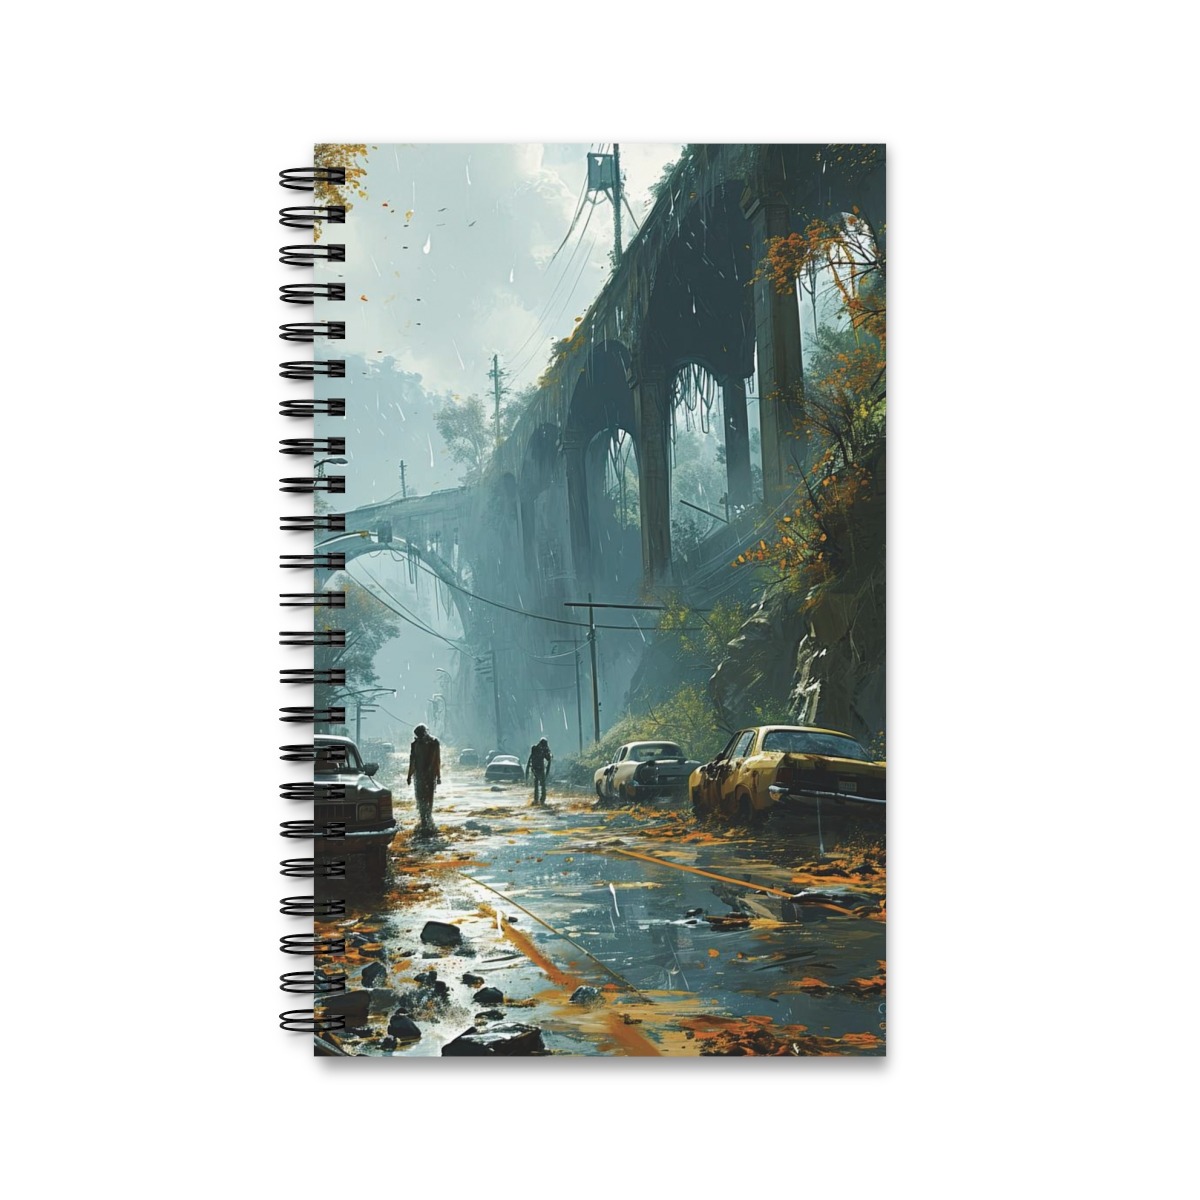 Notizbuch mit Zombie-Brücken-Aquarell